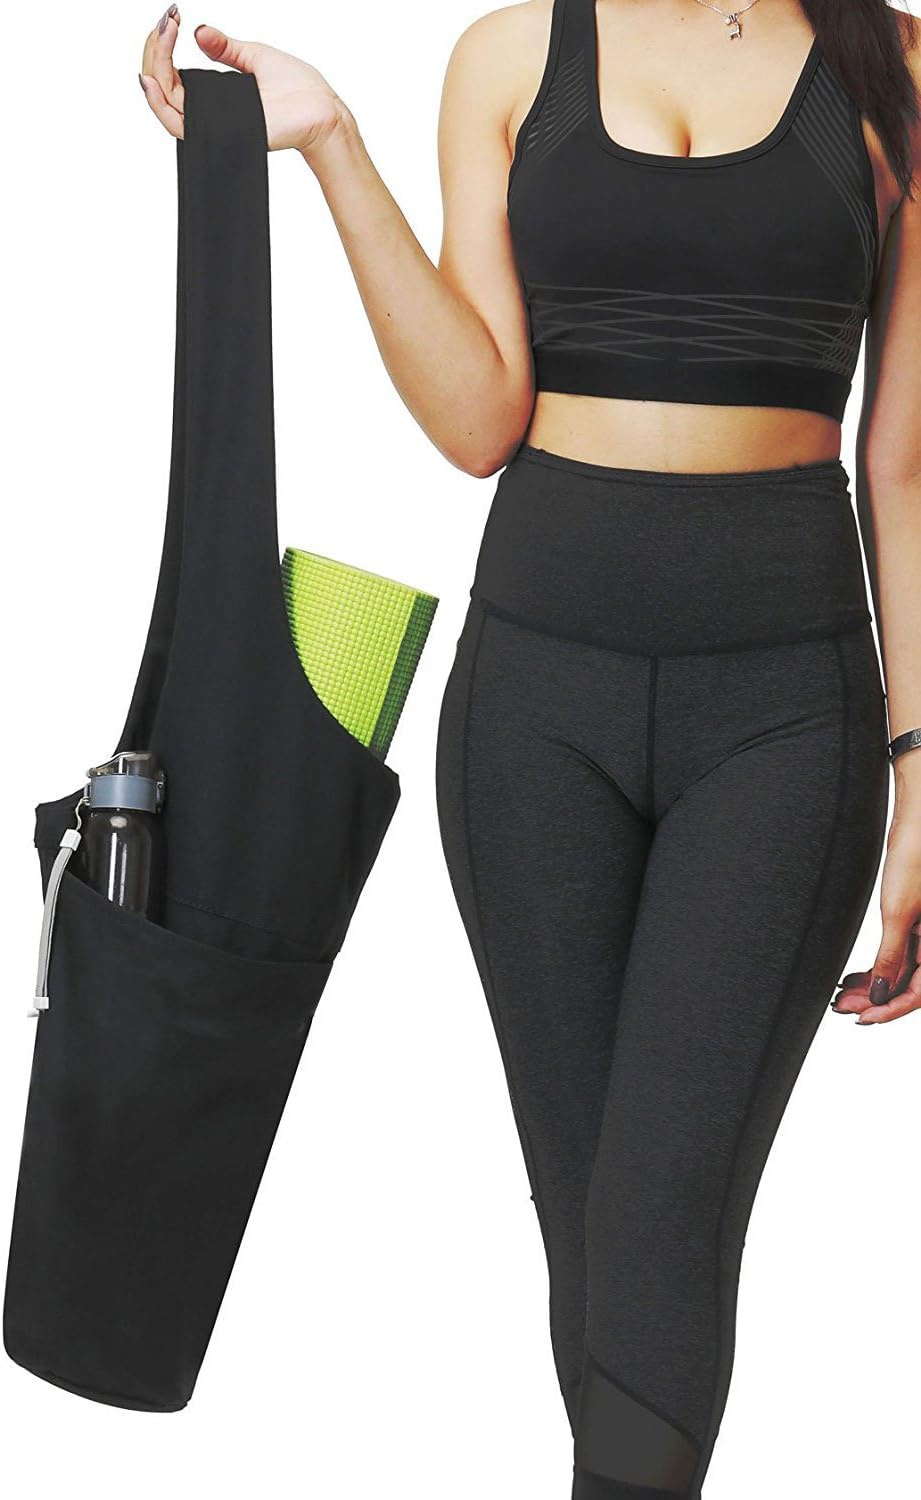 Yoga Mat Bag with Large Size Pocket, Yoga Mat Carrier Large Gym